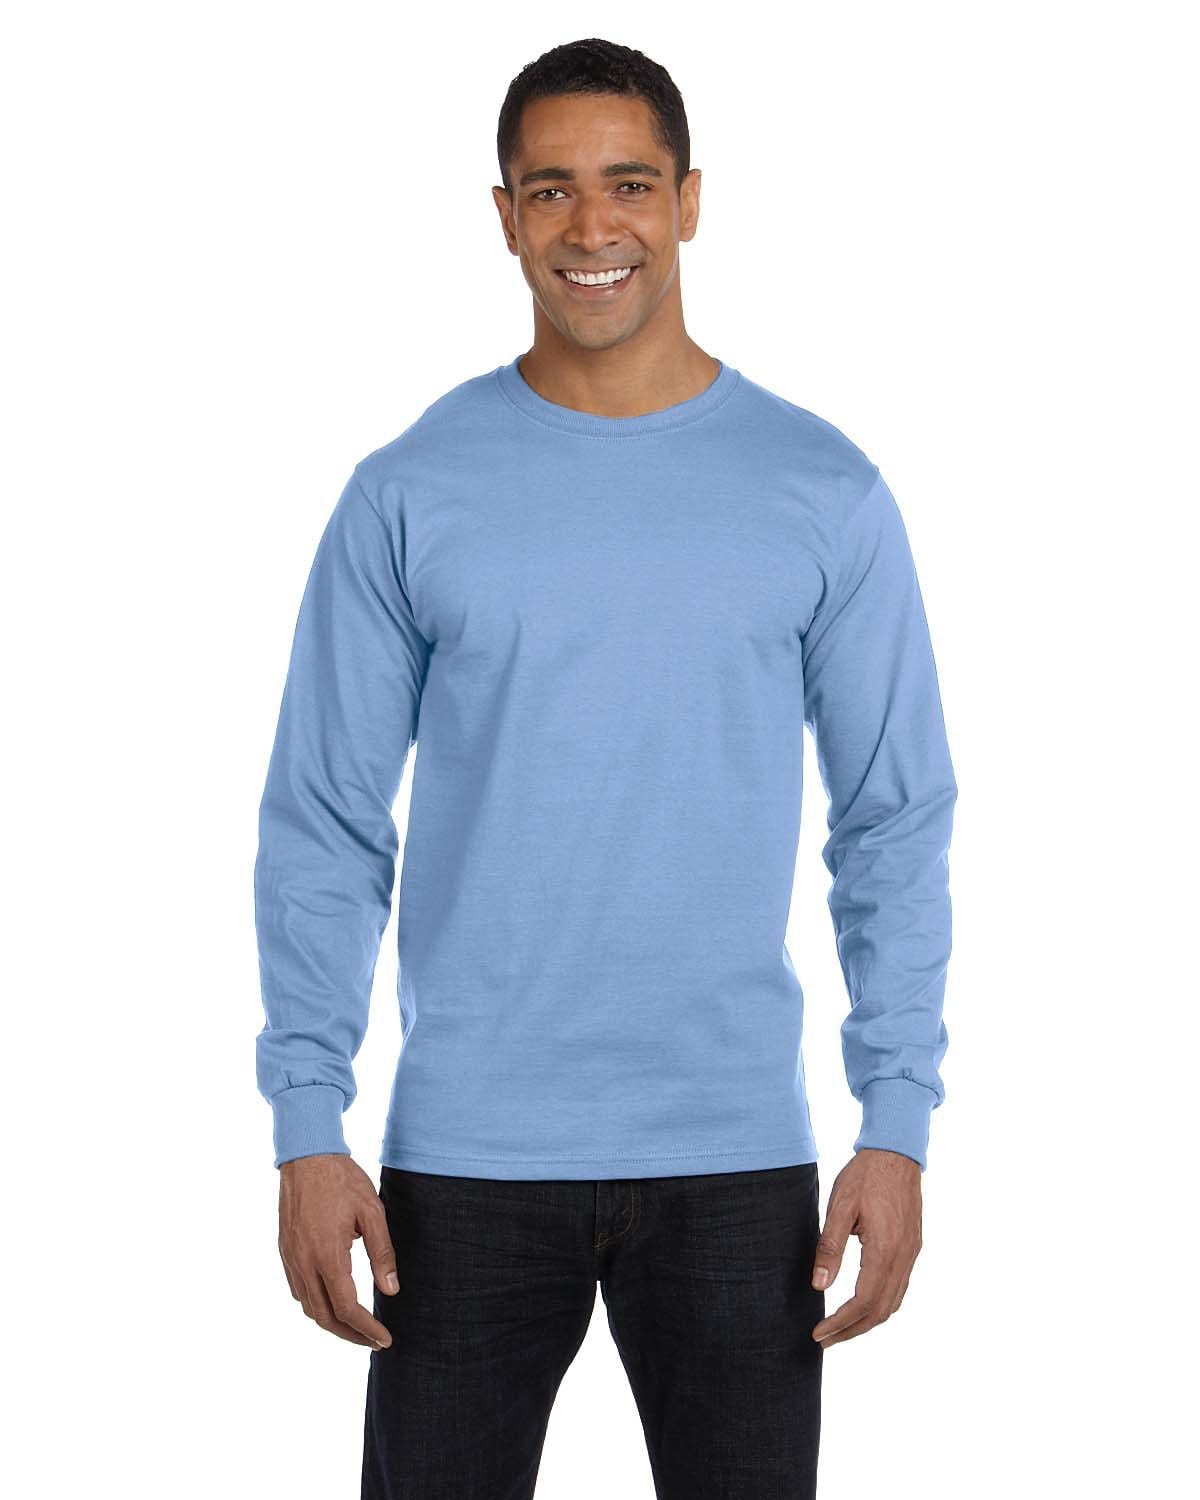 Hanes Adult Beefy-T Long-Sleeve T-Shirt Light Blue S Men's